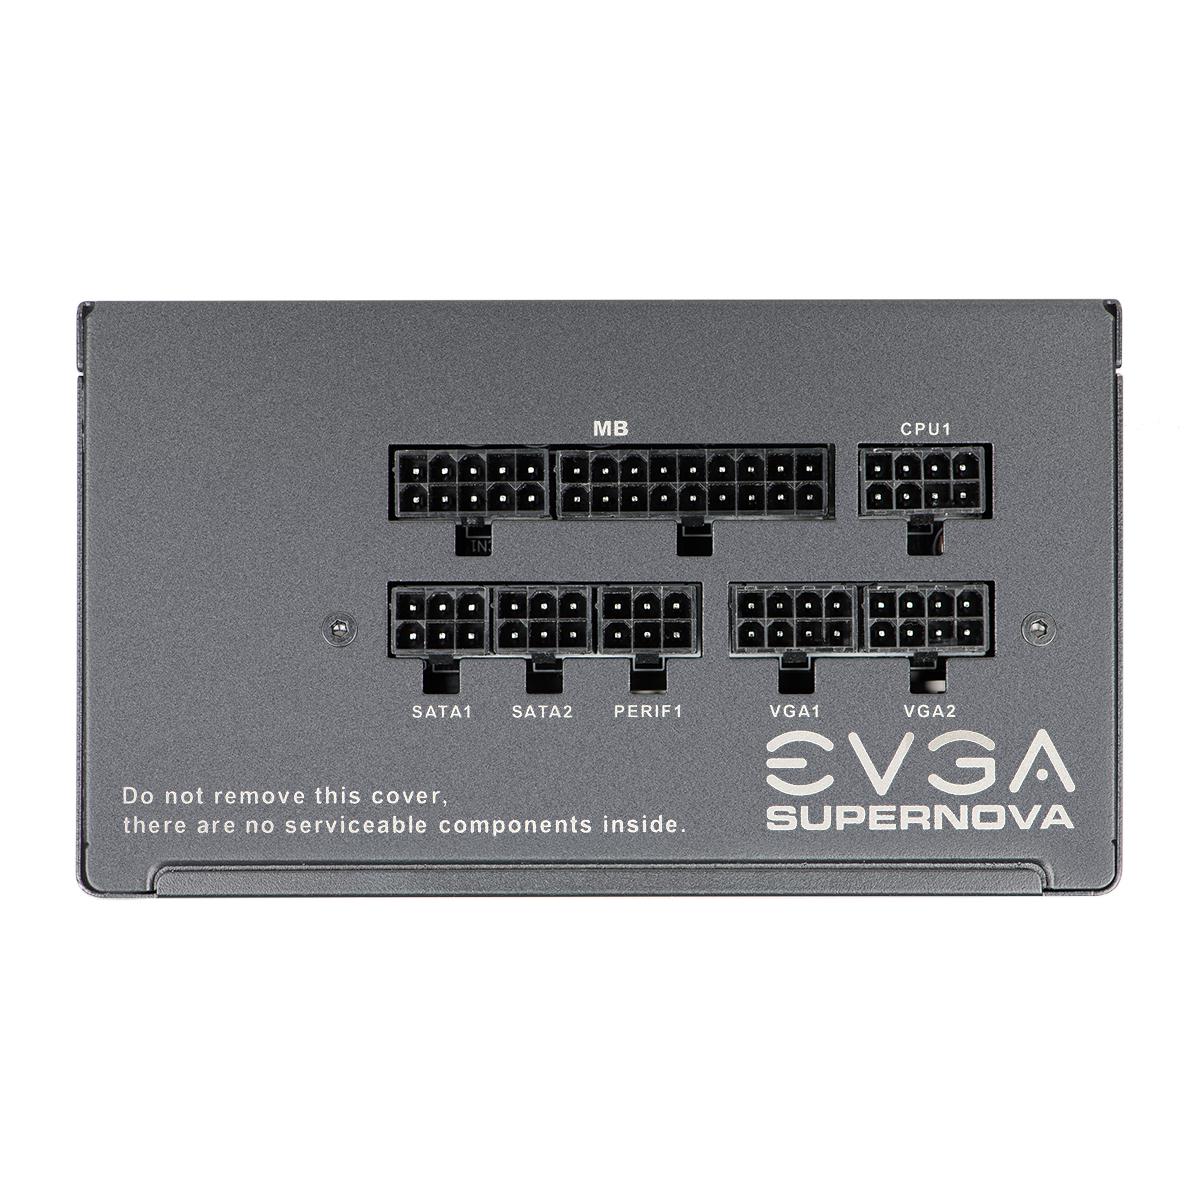 Nguồn máy tính EVGA SuperNOVA 650 G3 650W 80+ Gold ATX slide image 1